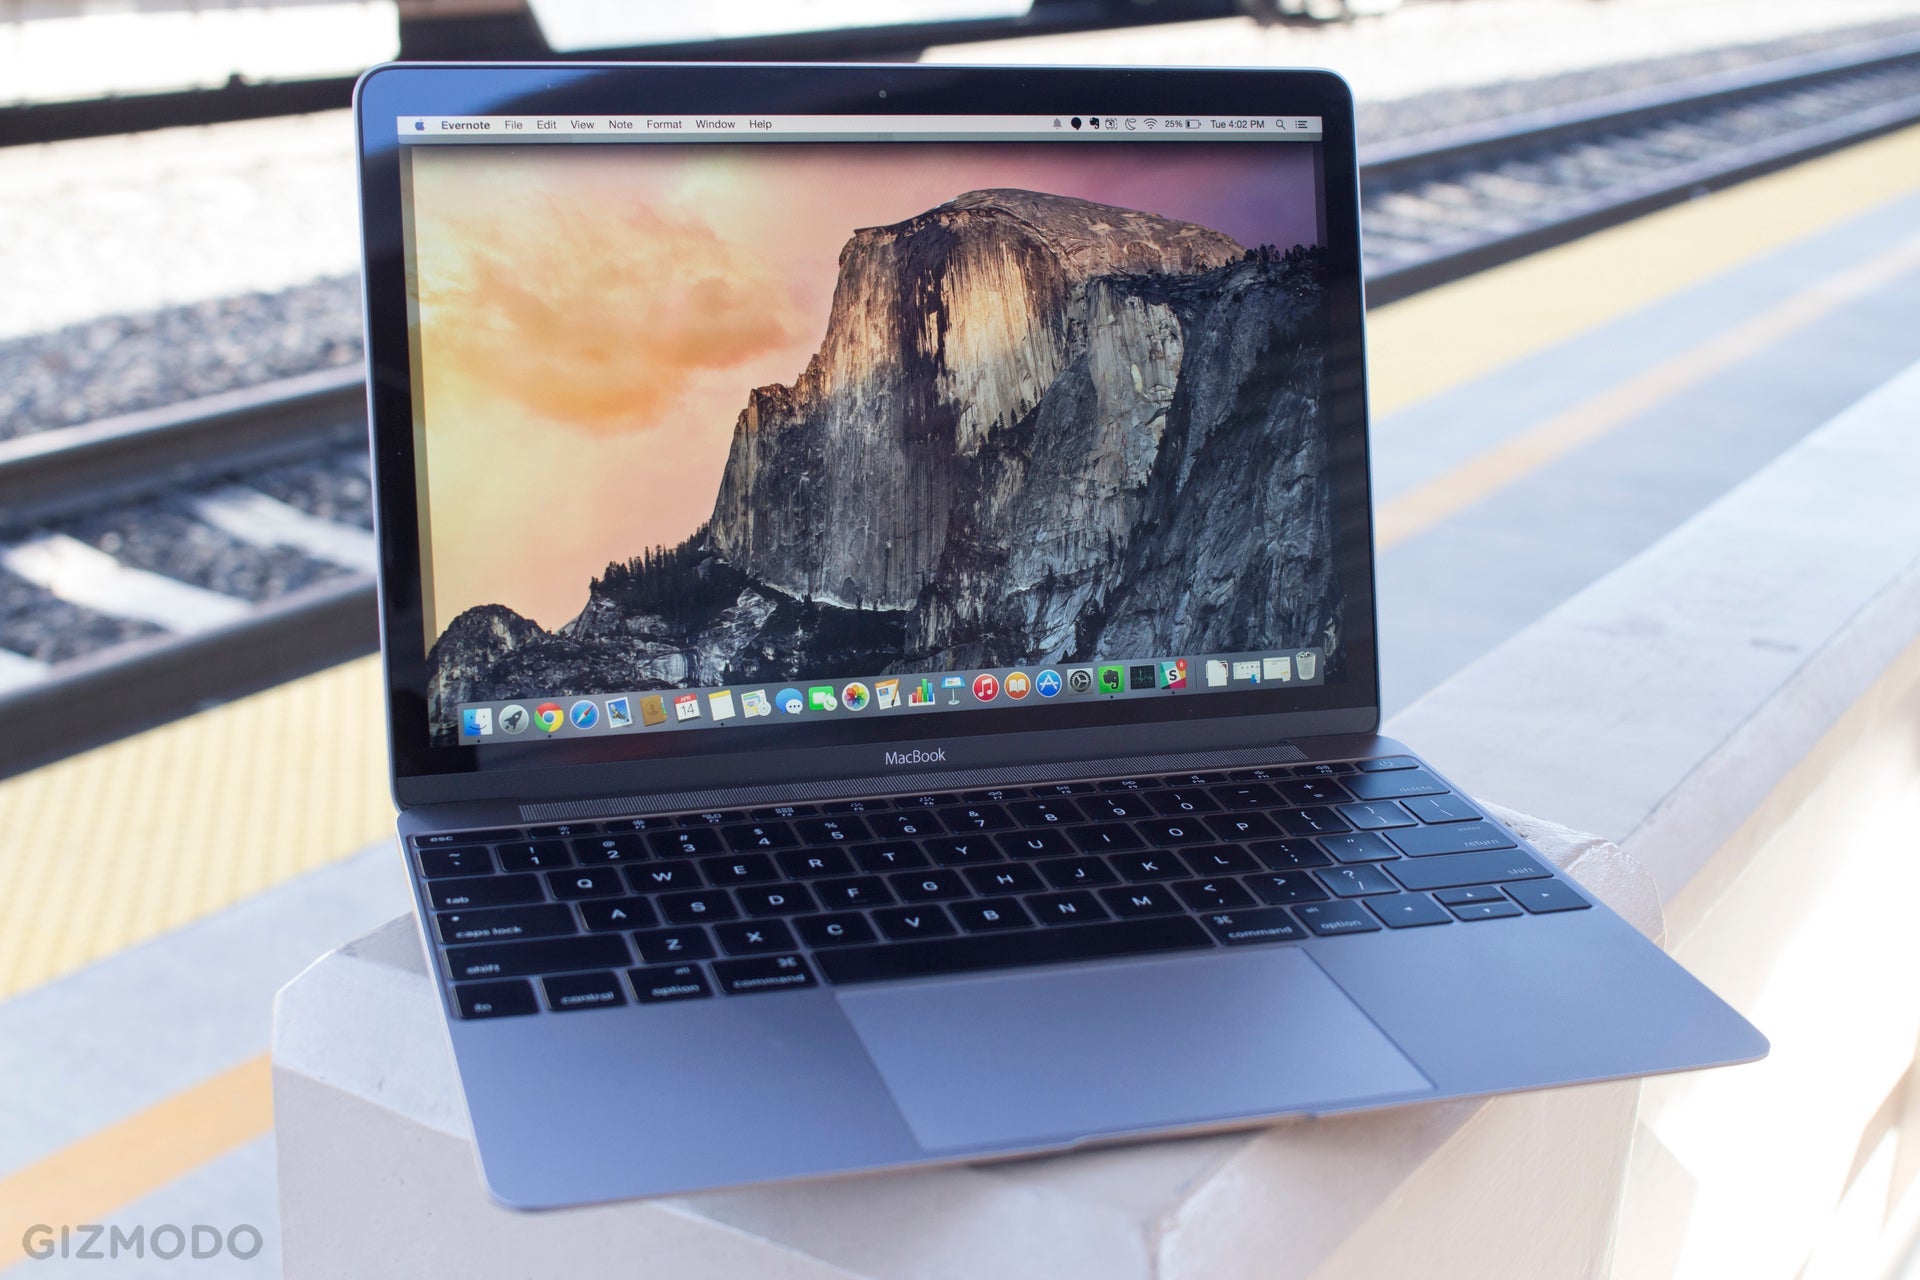 MacBook 12 (Photo: Sean Hollister/Gizmodo)